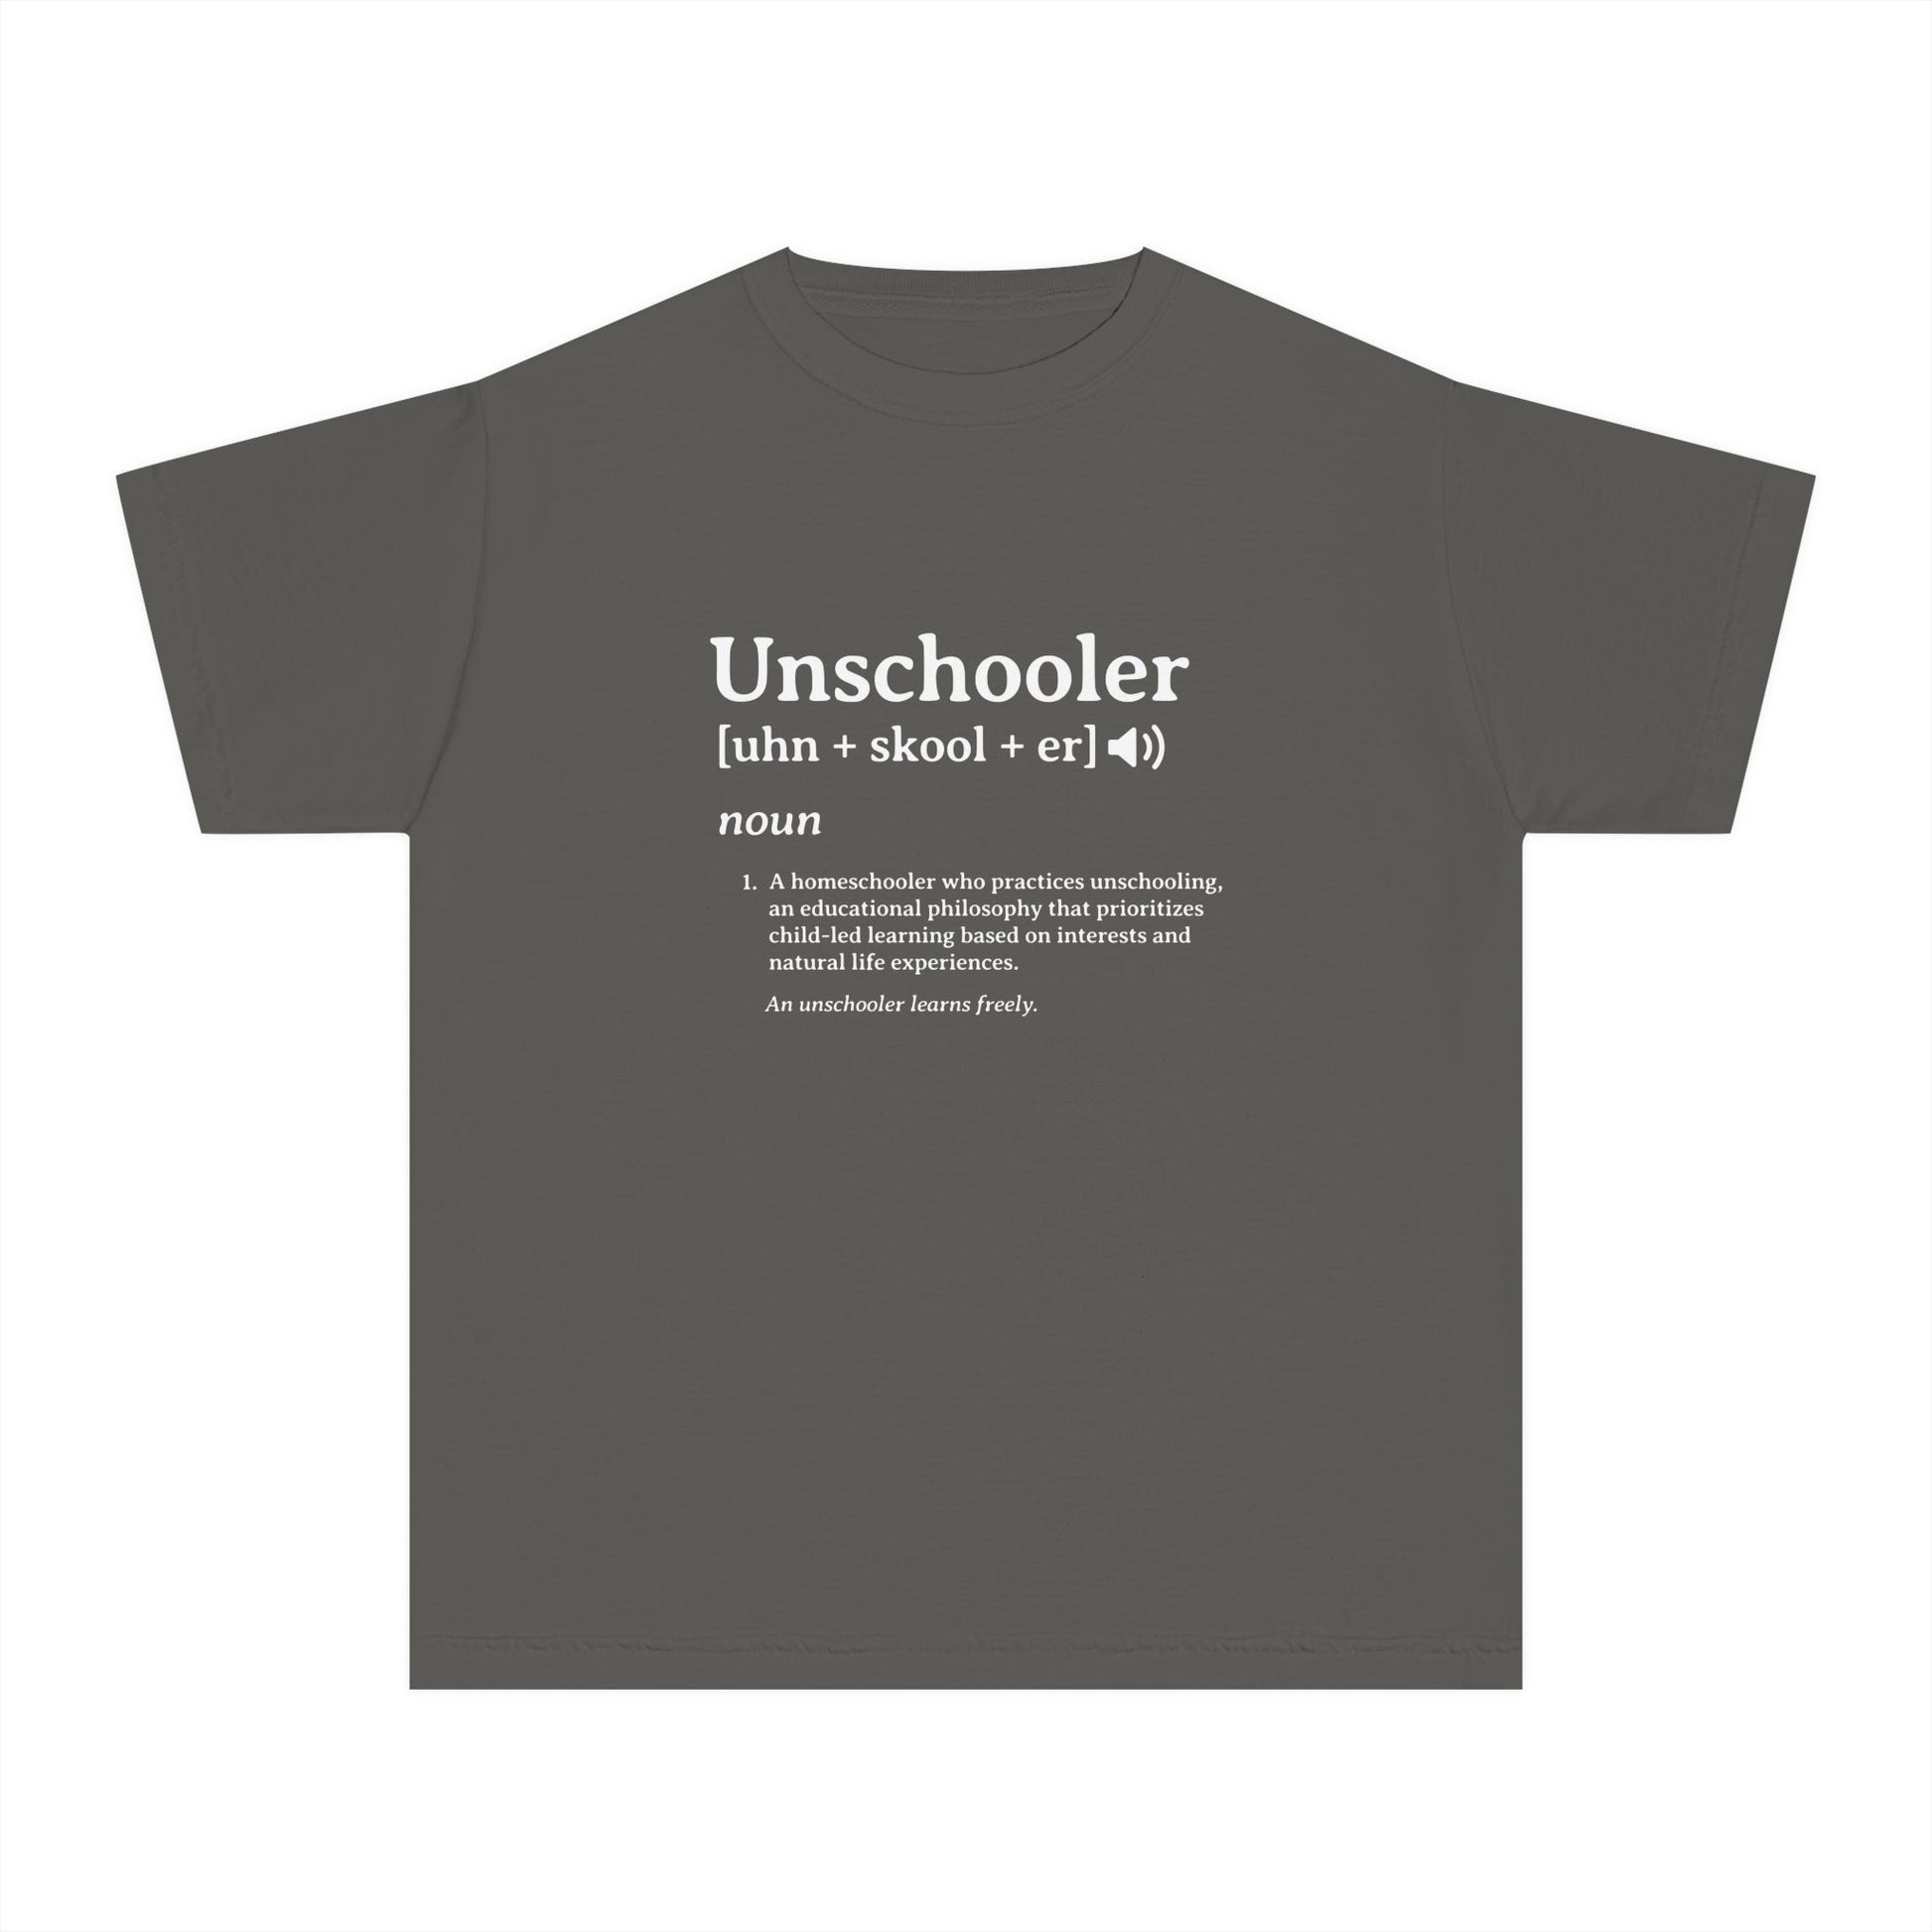 Unschooler Definition Youth Shirt for Homeschool kids